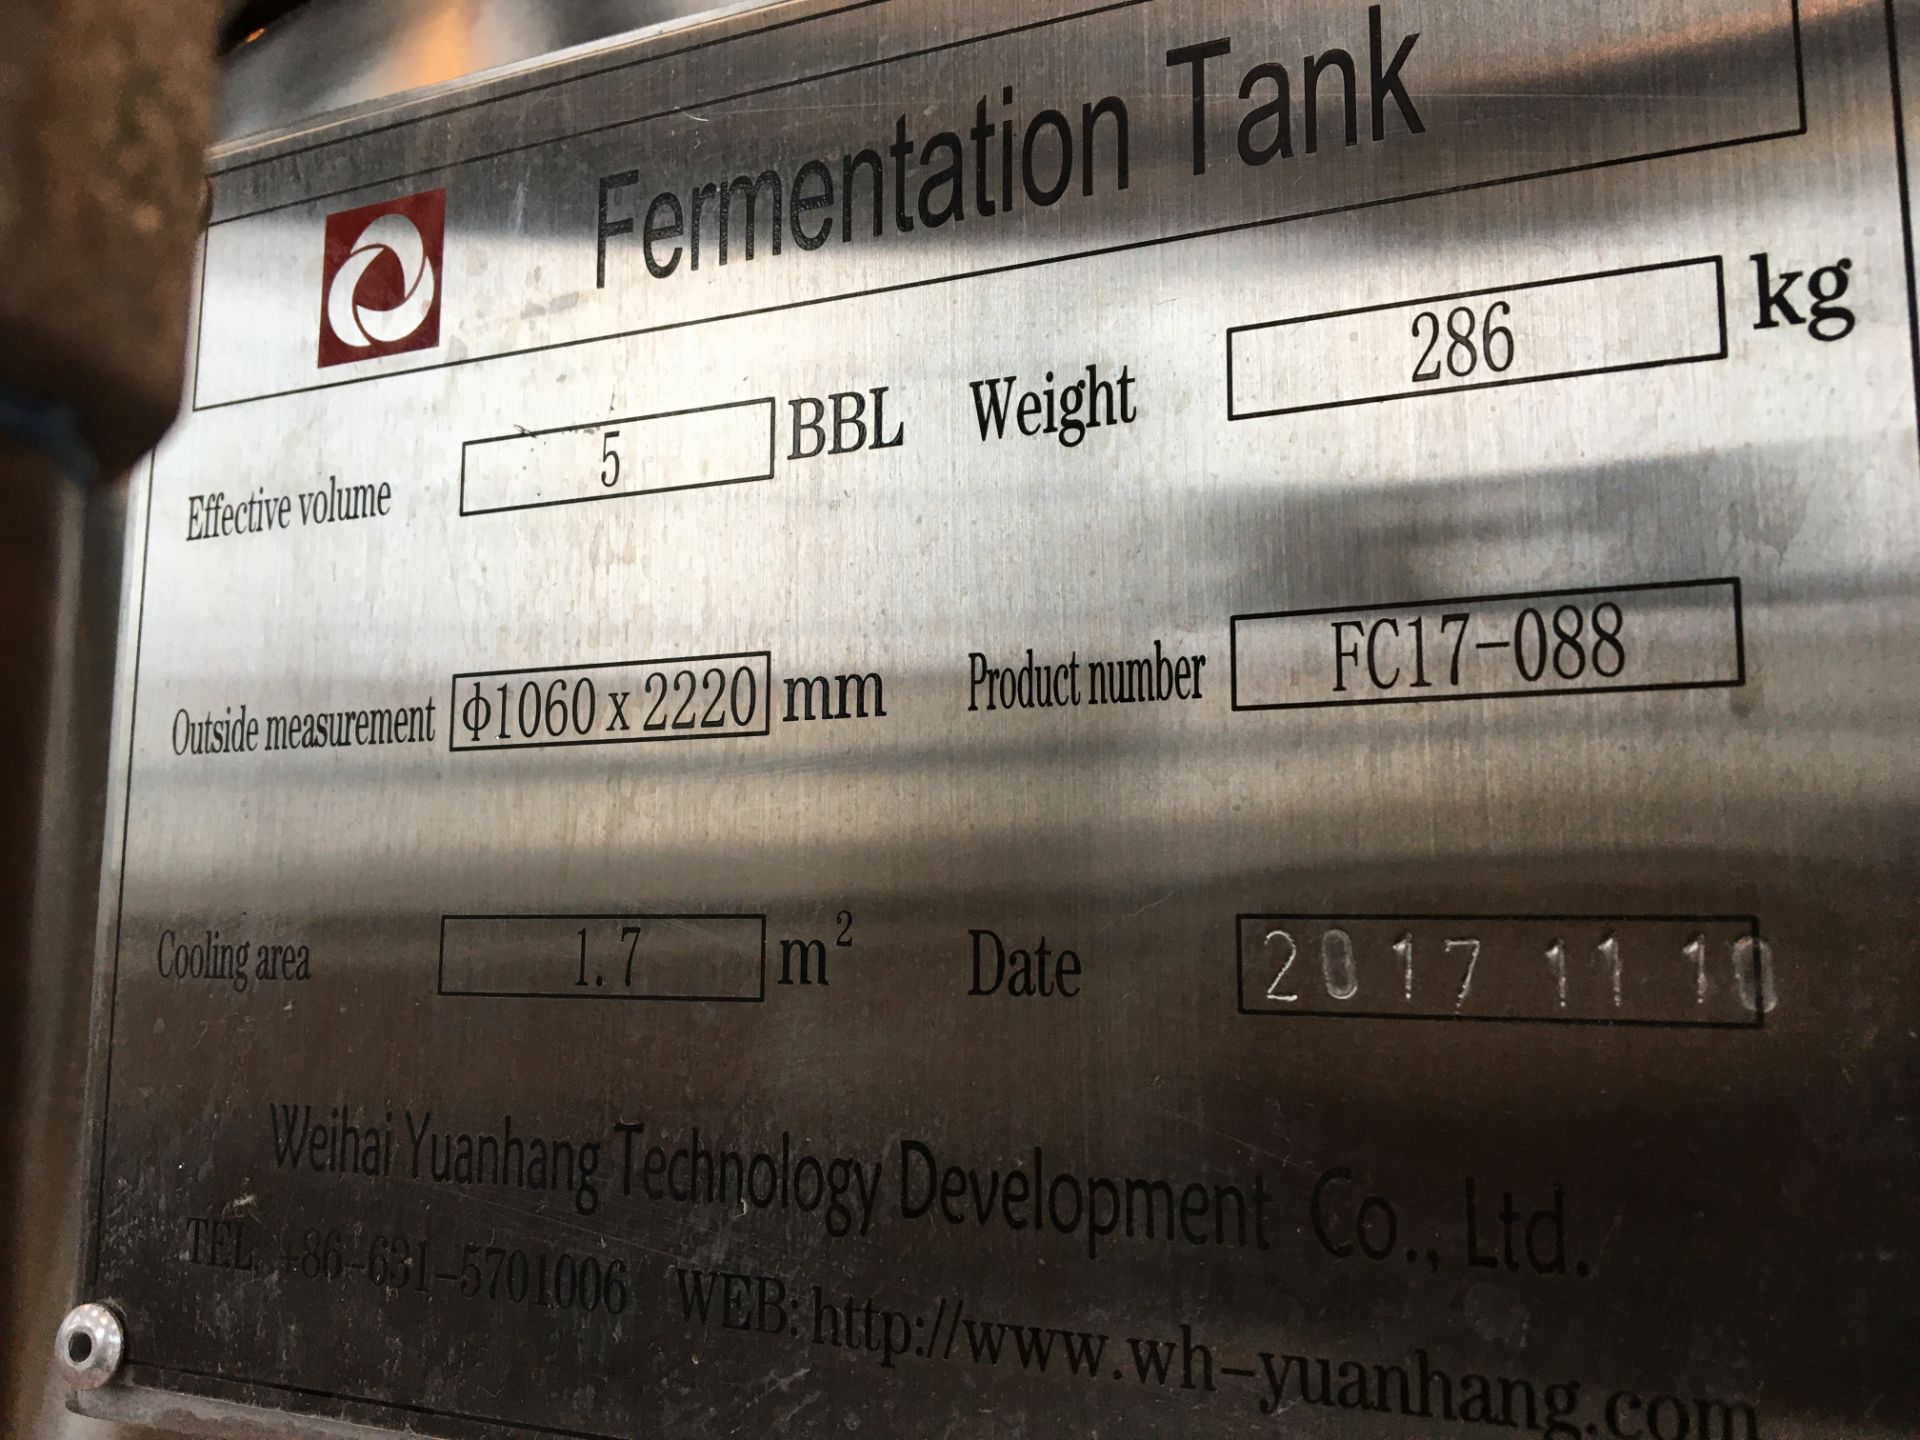 5-BBL Minnetonka Fermentation Tank, - Image 12 of 14